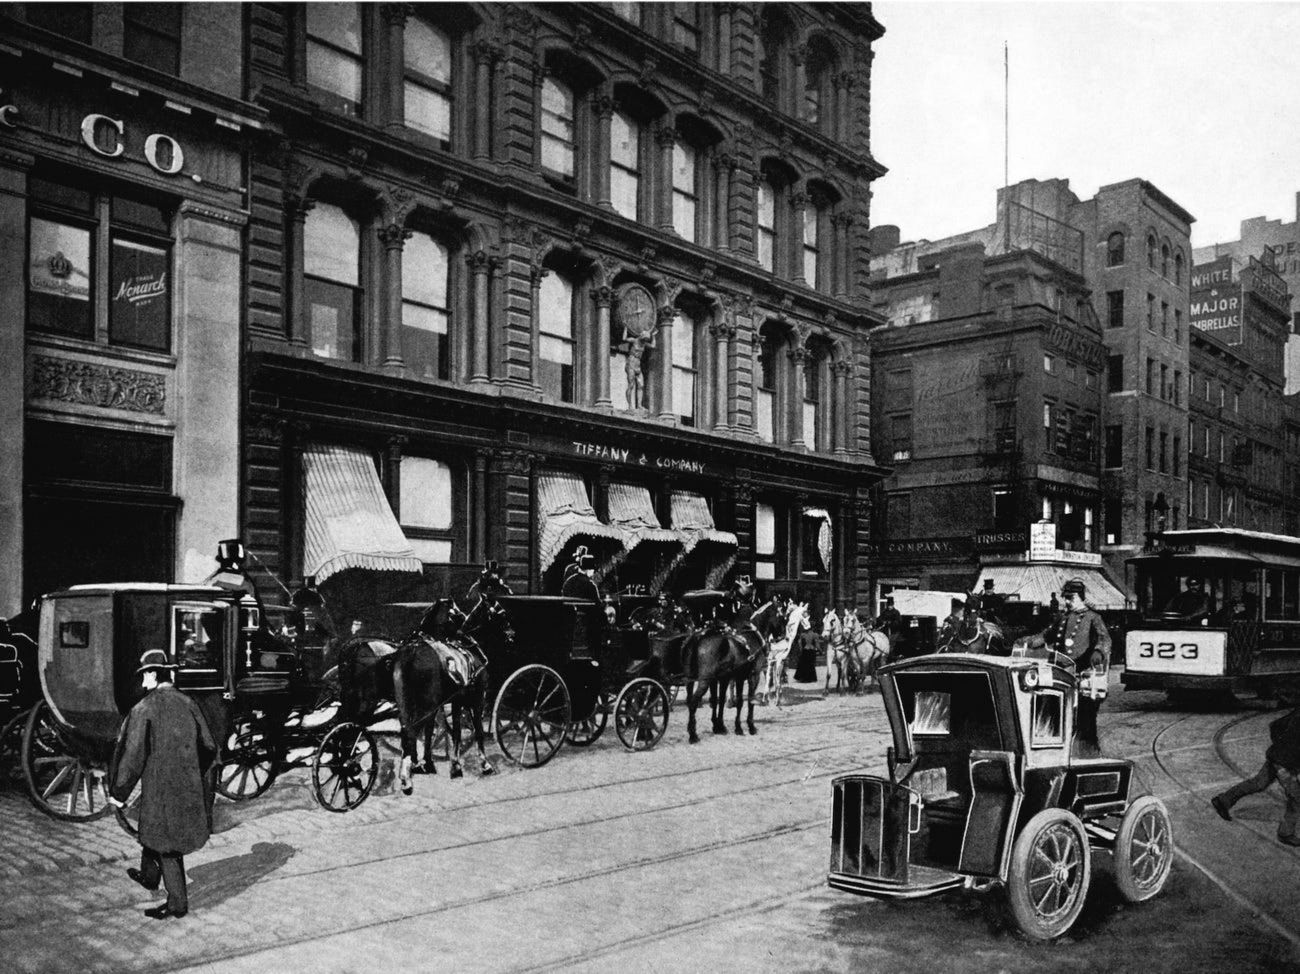 Tiffany & Co. in 1889